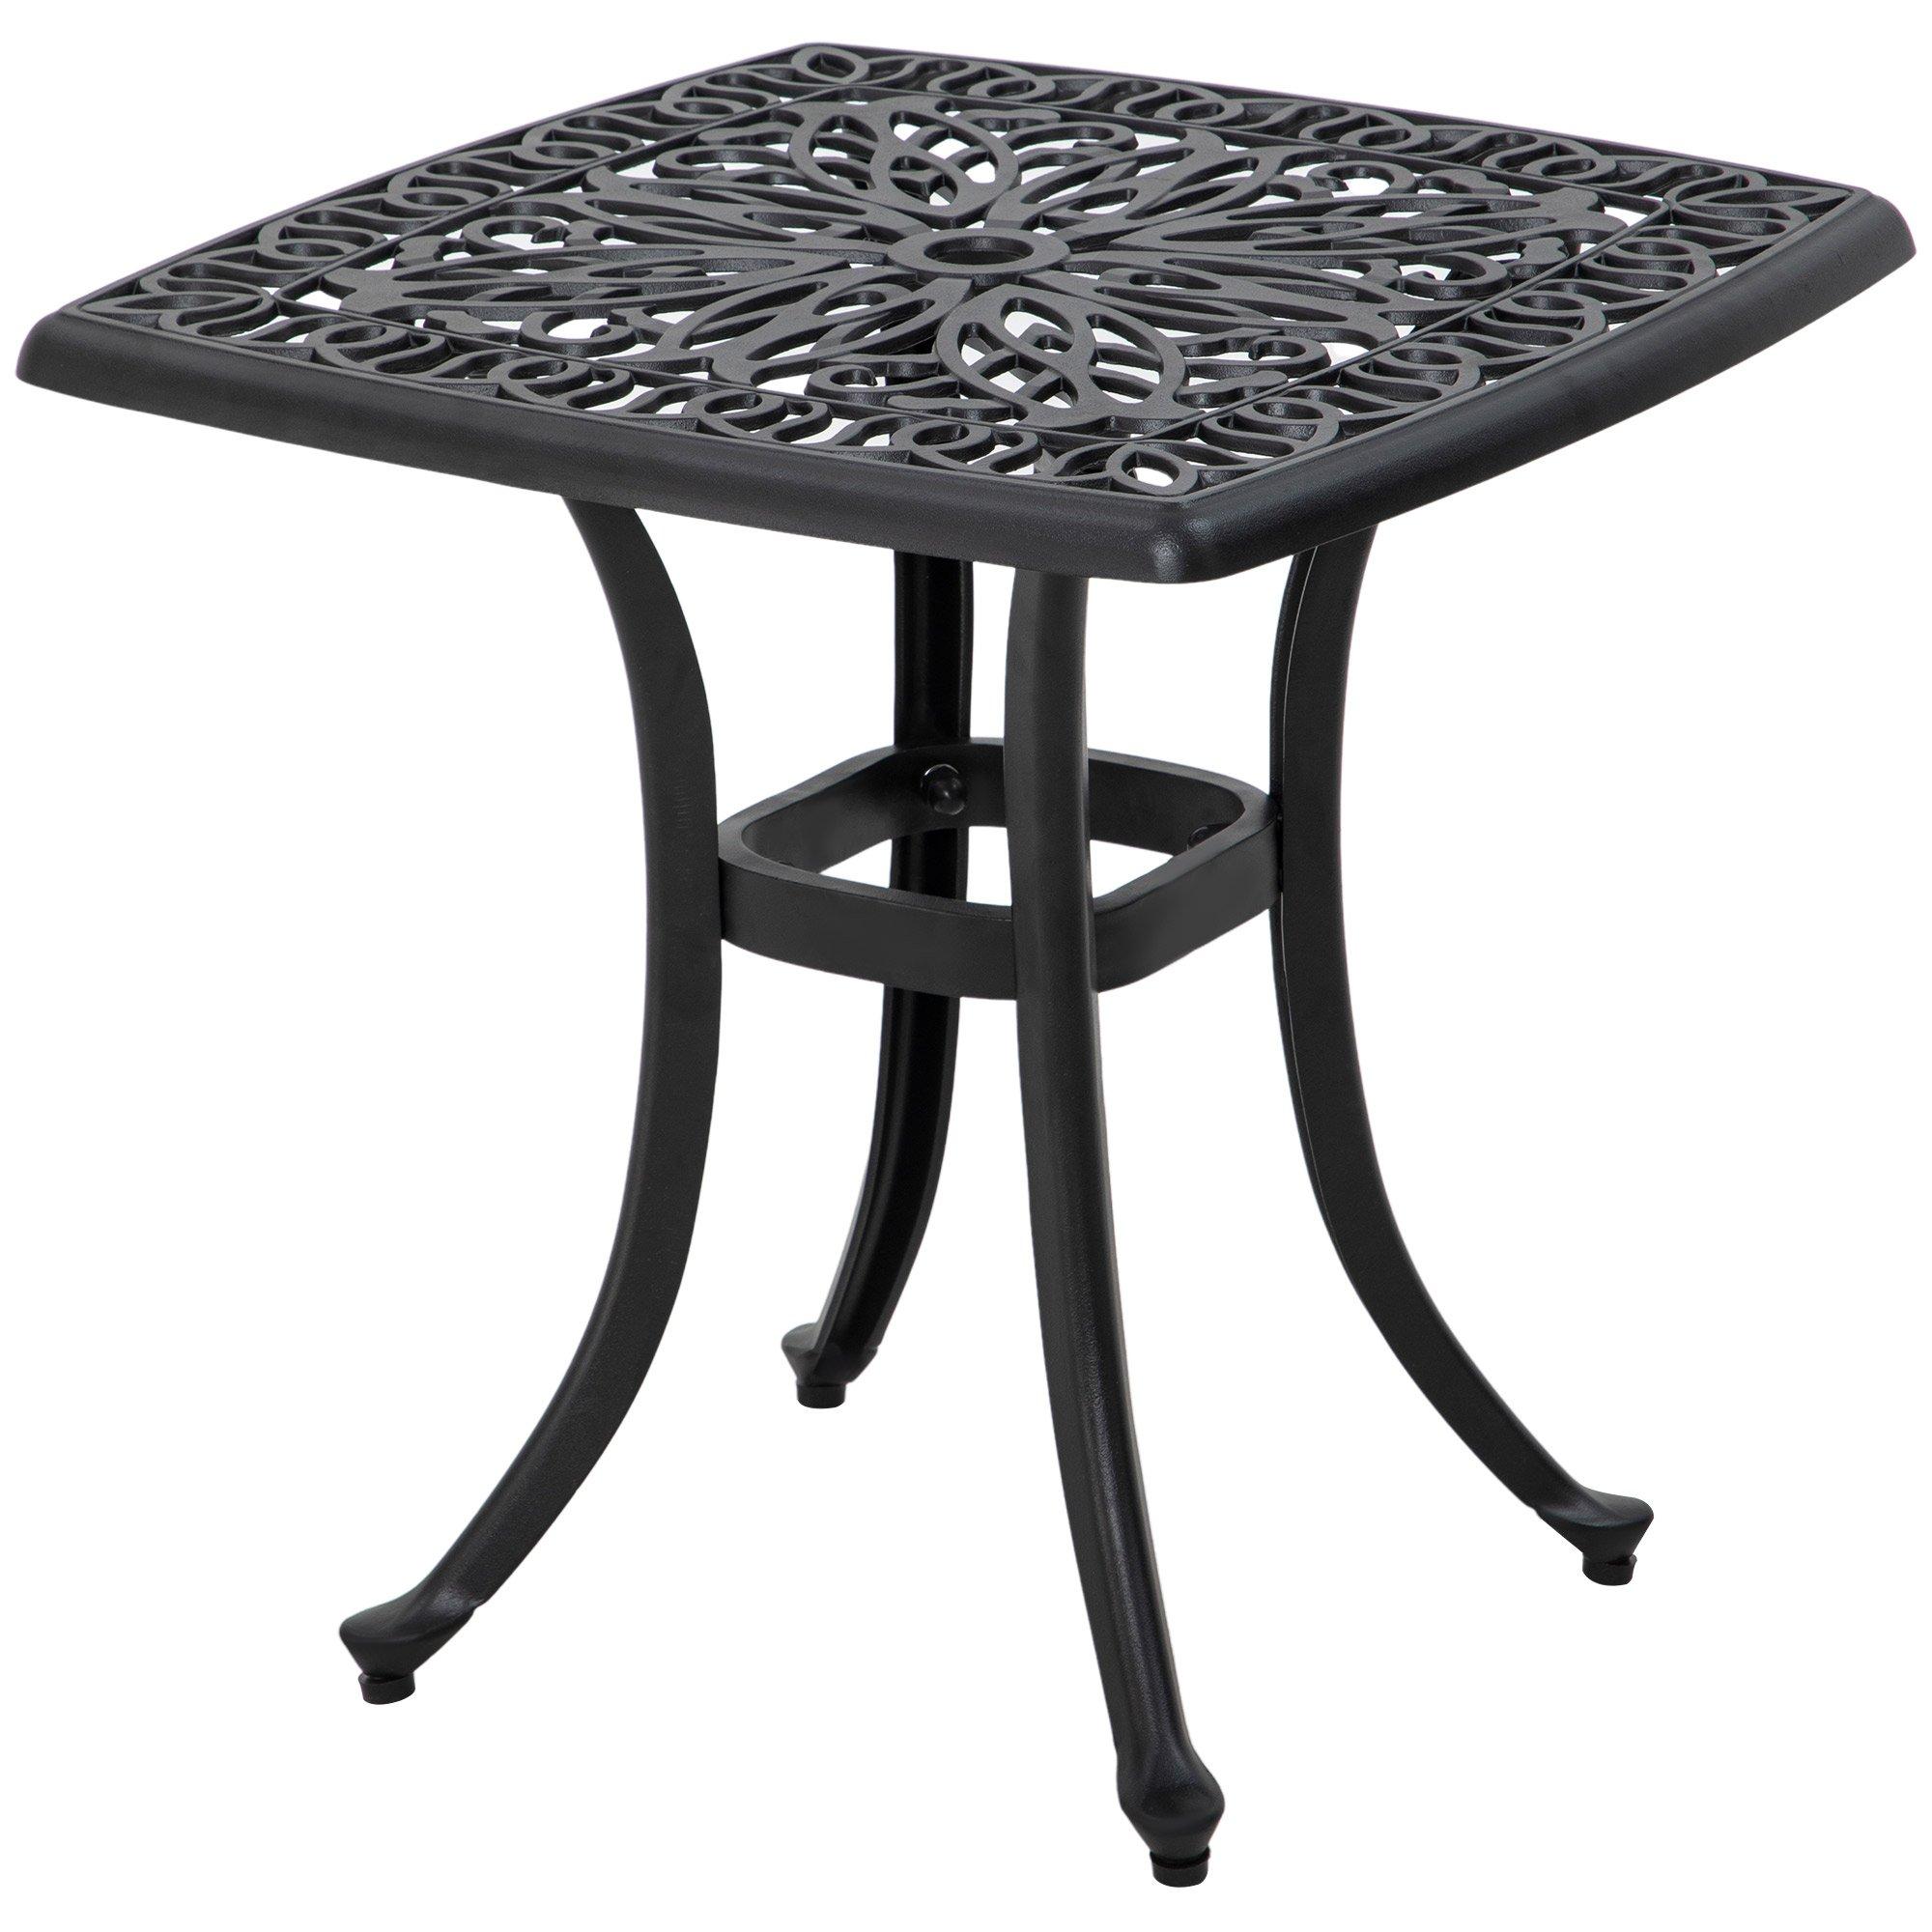 Cast Aluminium Bistro Table with Umbrella Hole for Poolside